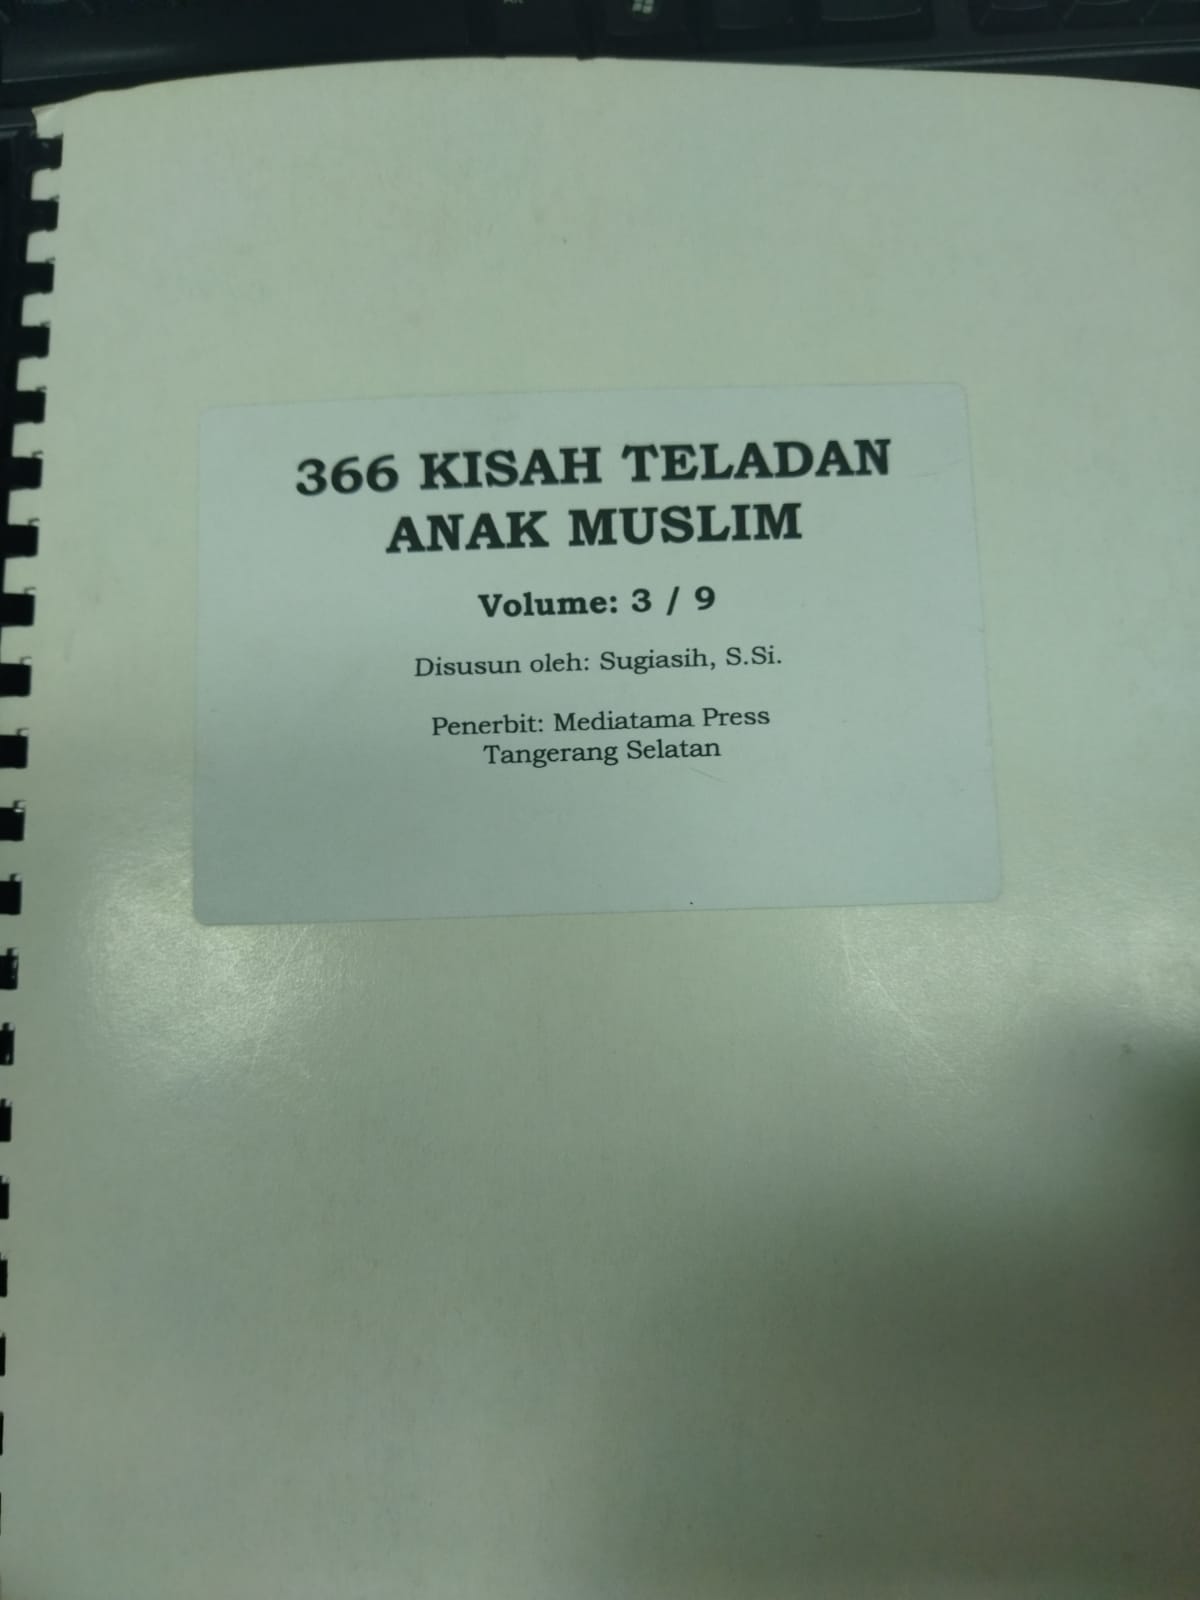 366 kisah teladan anak muslim volume 3/9